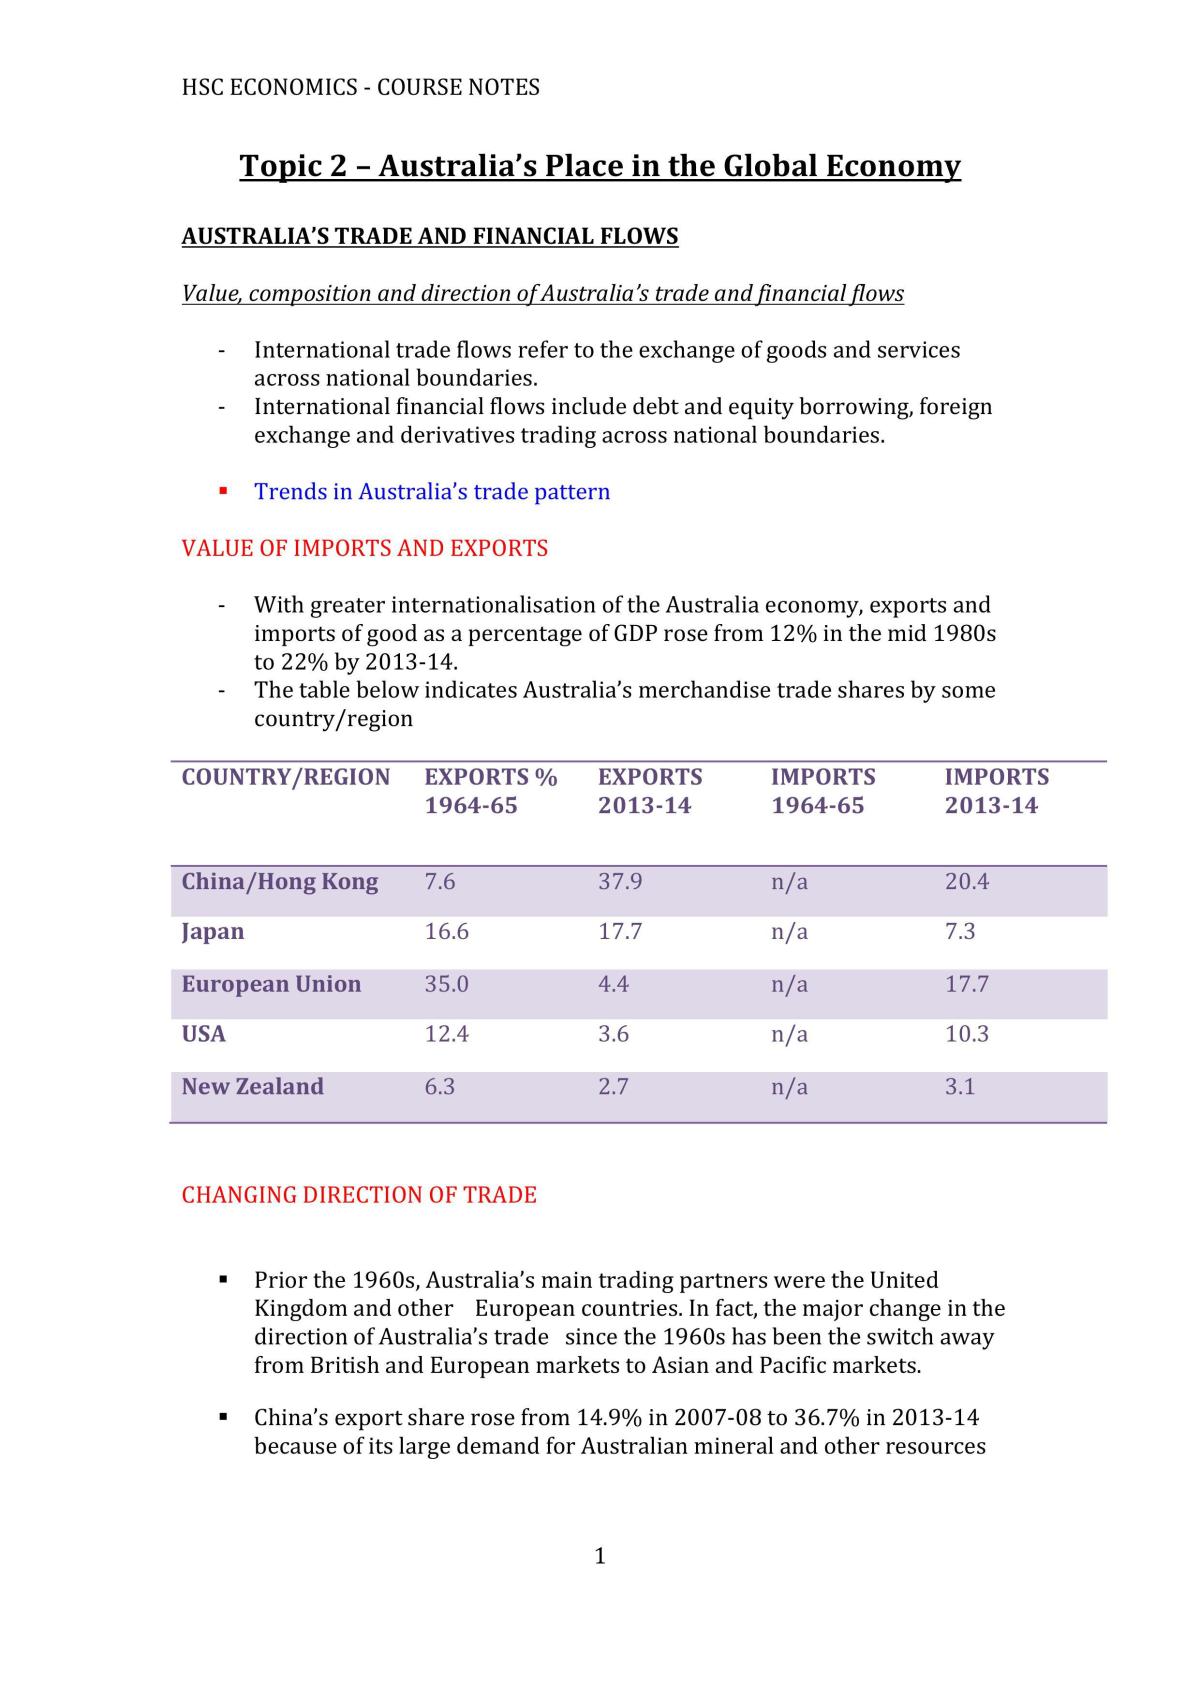 Complete Notes for HSC Economics Course - Page 1